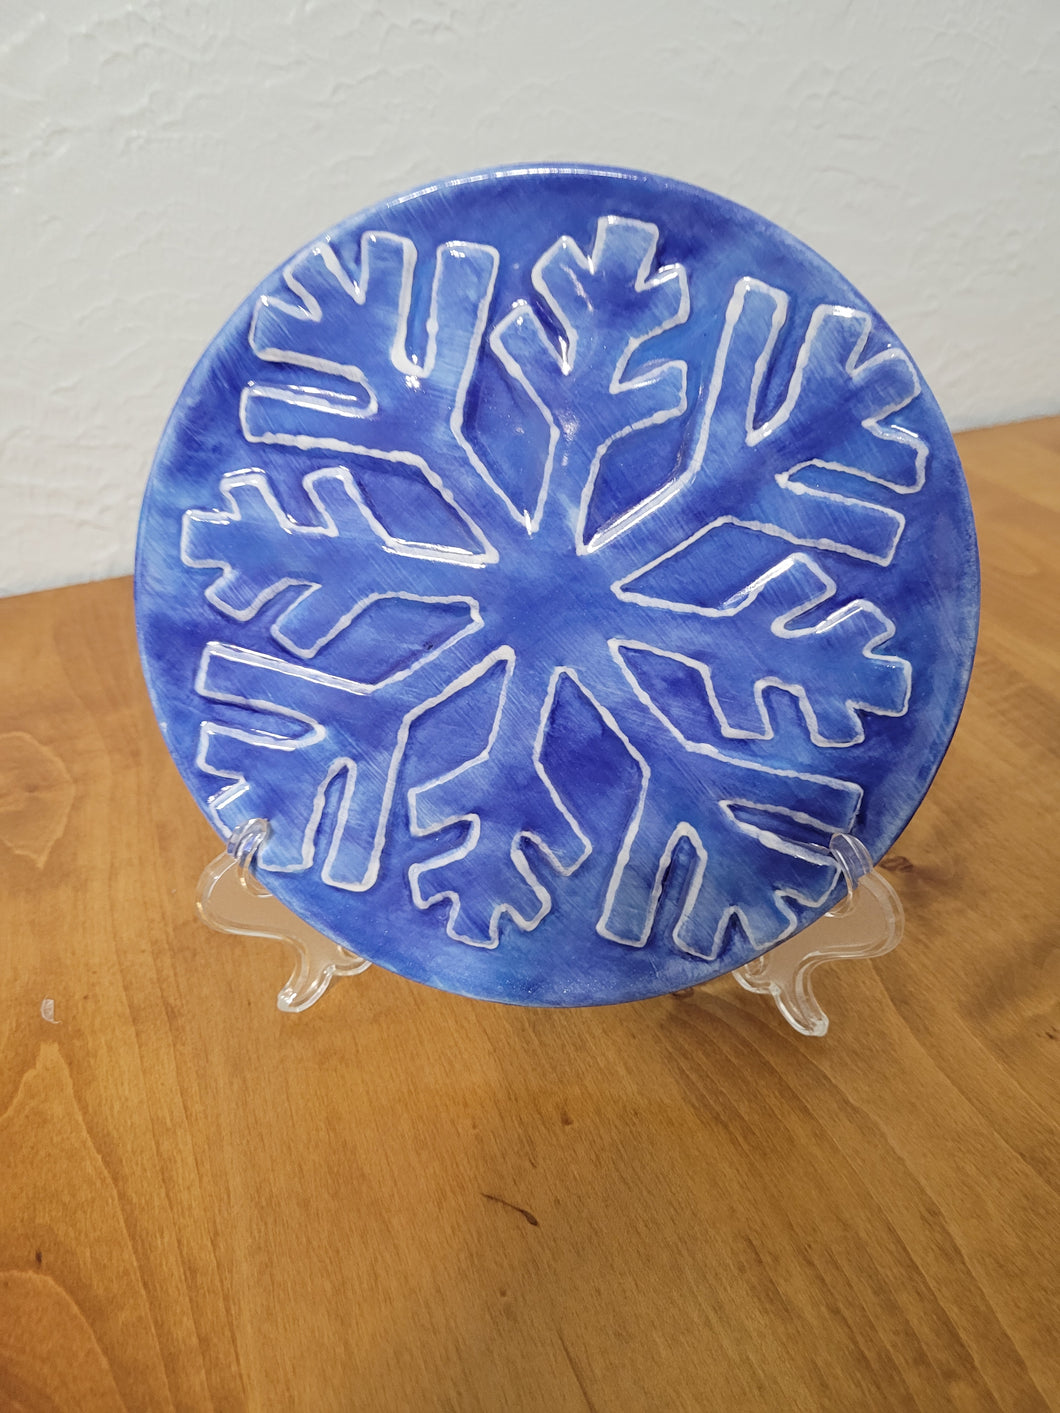 Snowflake Plate